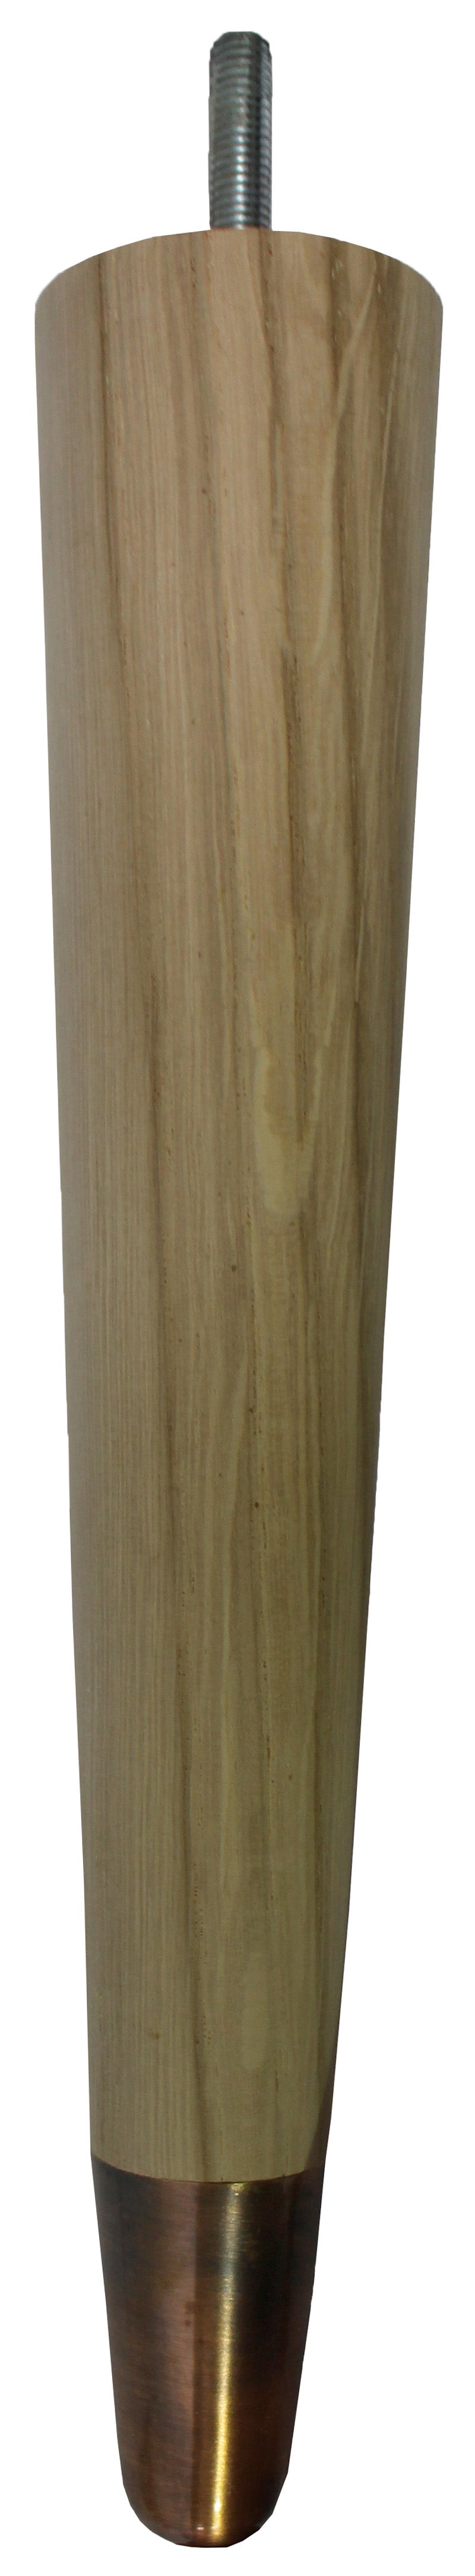 Liva Solid Oak Tapered Furniture Legs - Raw Finish - Antique Copper Slipper Cups - Set of 4